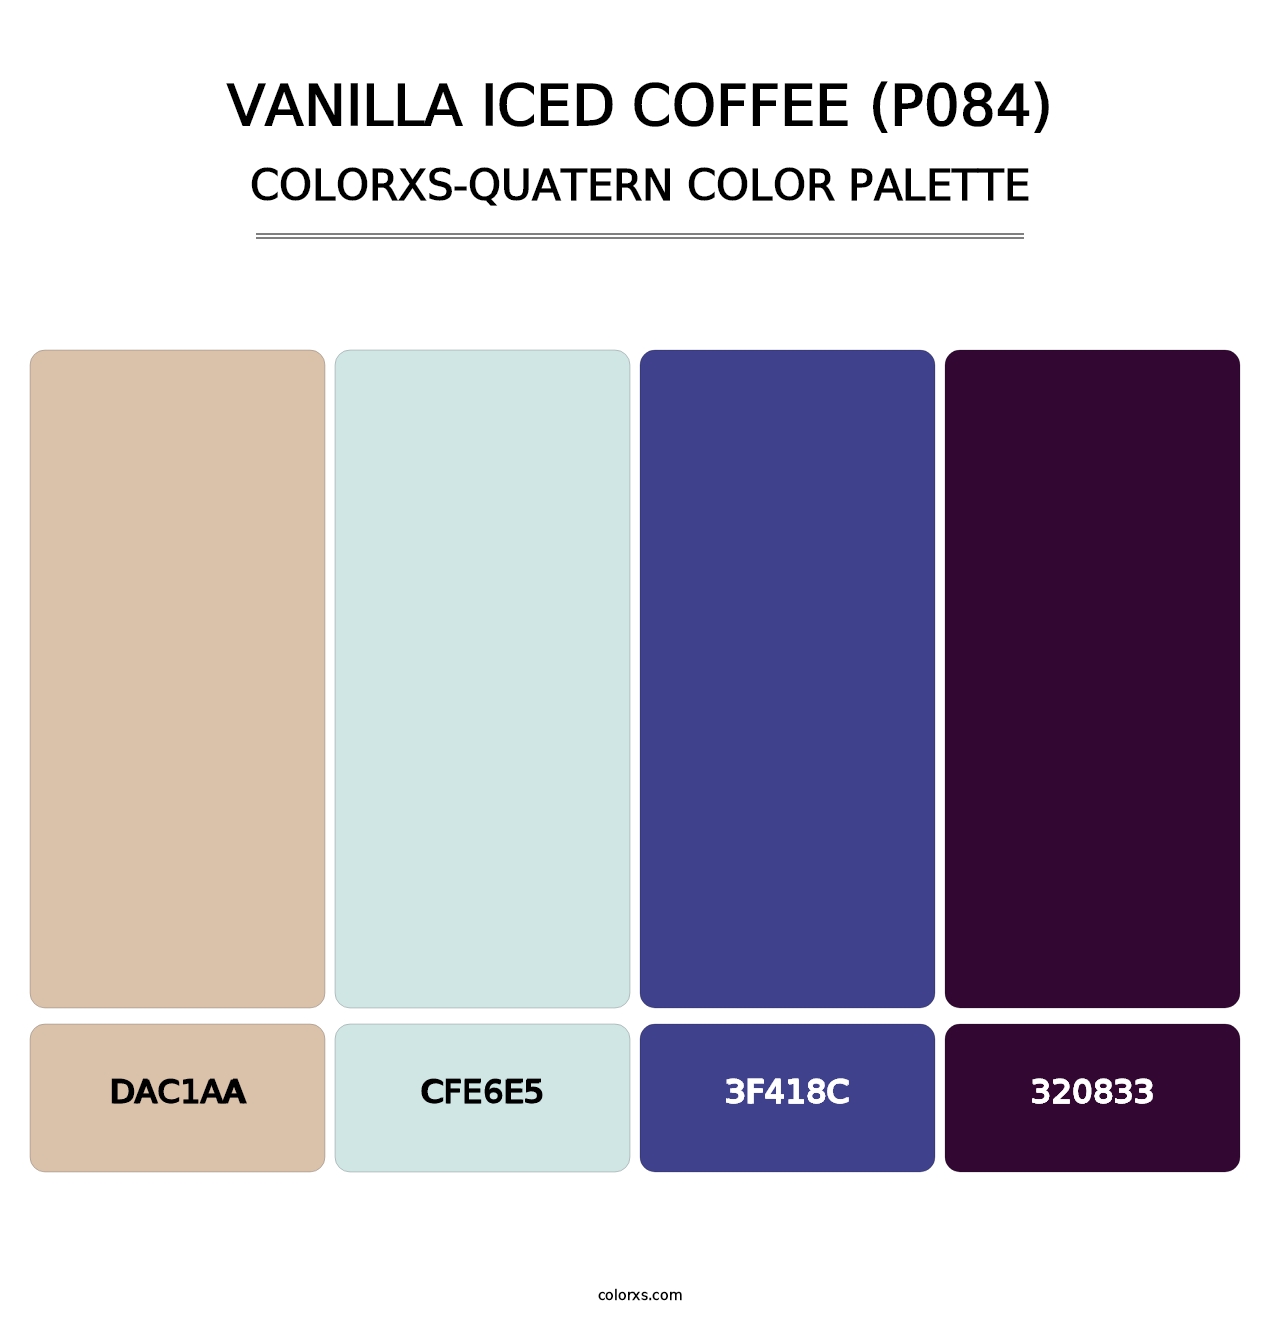 Vanilla Iced Coffee (P084) - Colorxs Quatern Palette